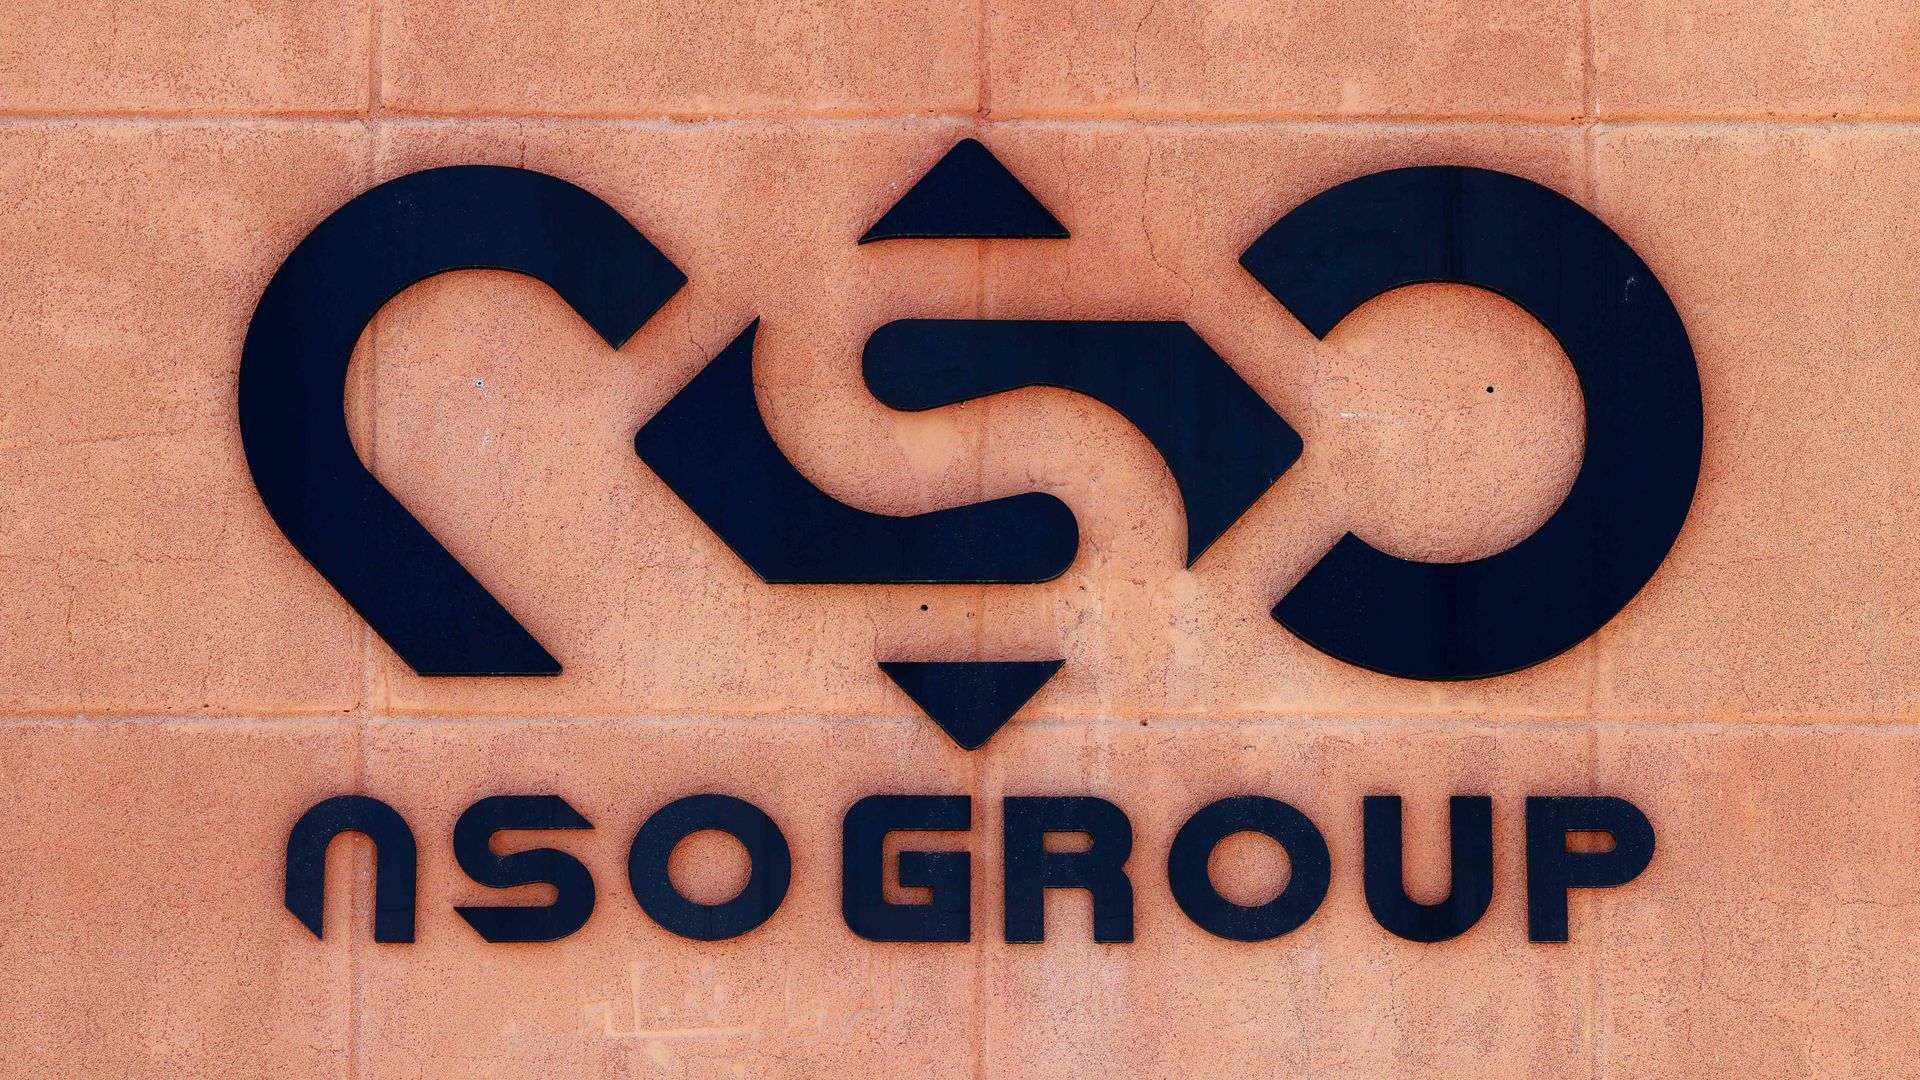 NSO group logo